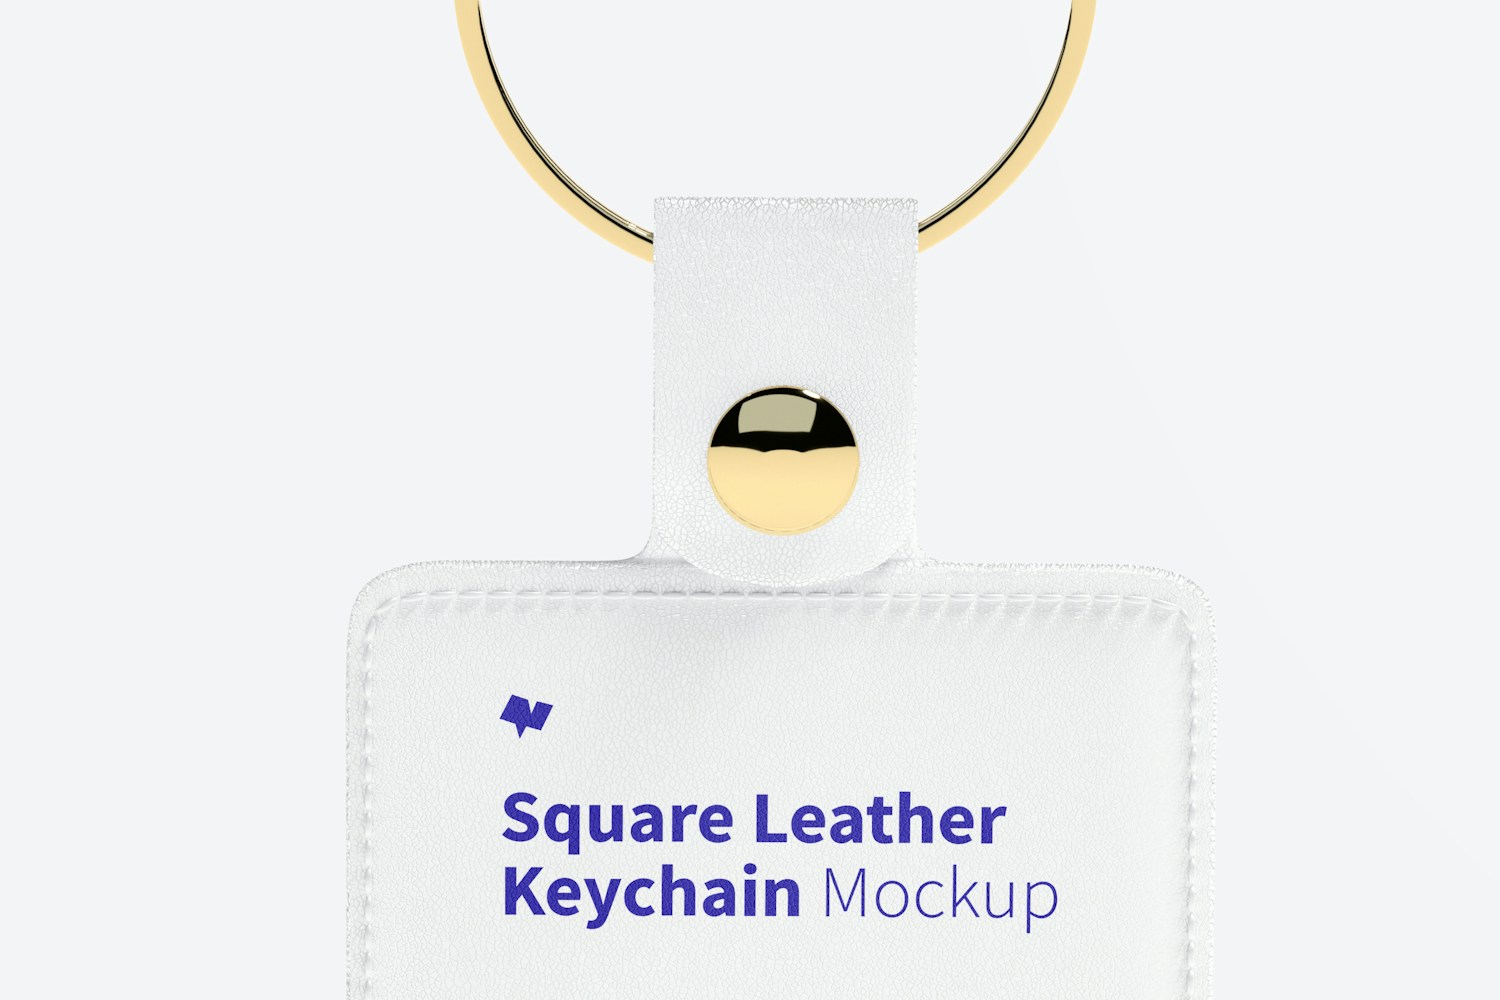 Square Leather Keychain Mockup